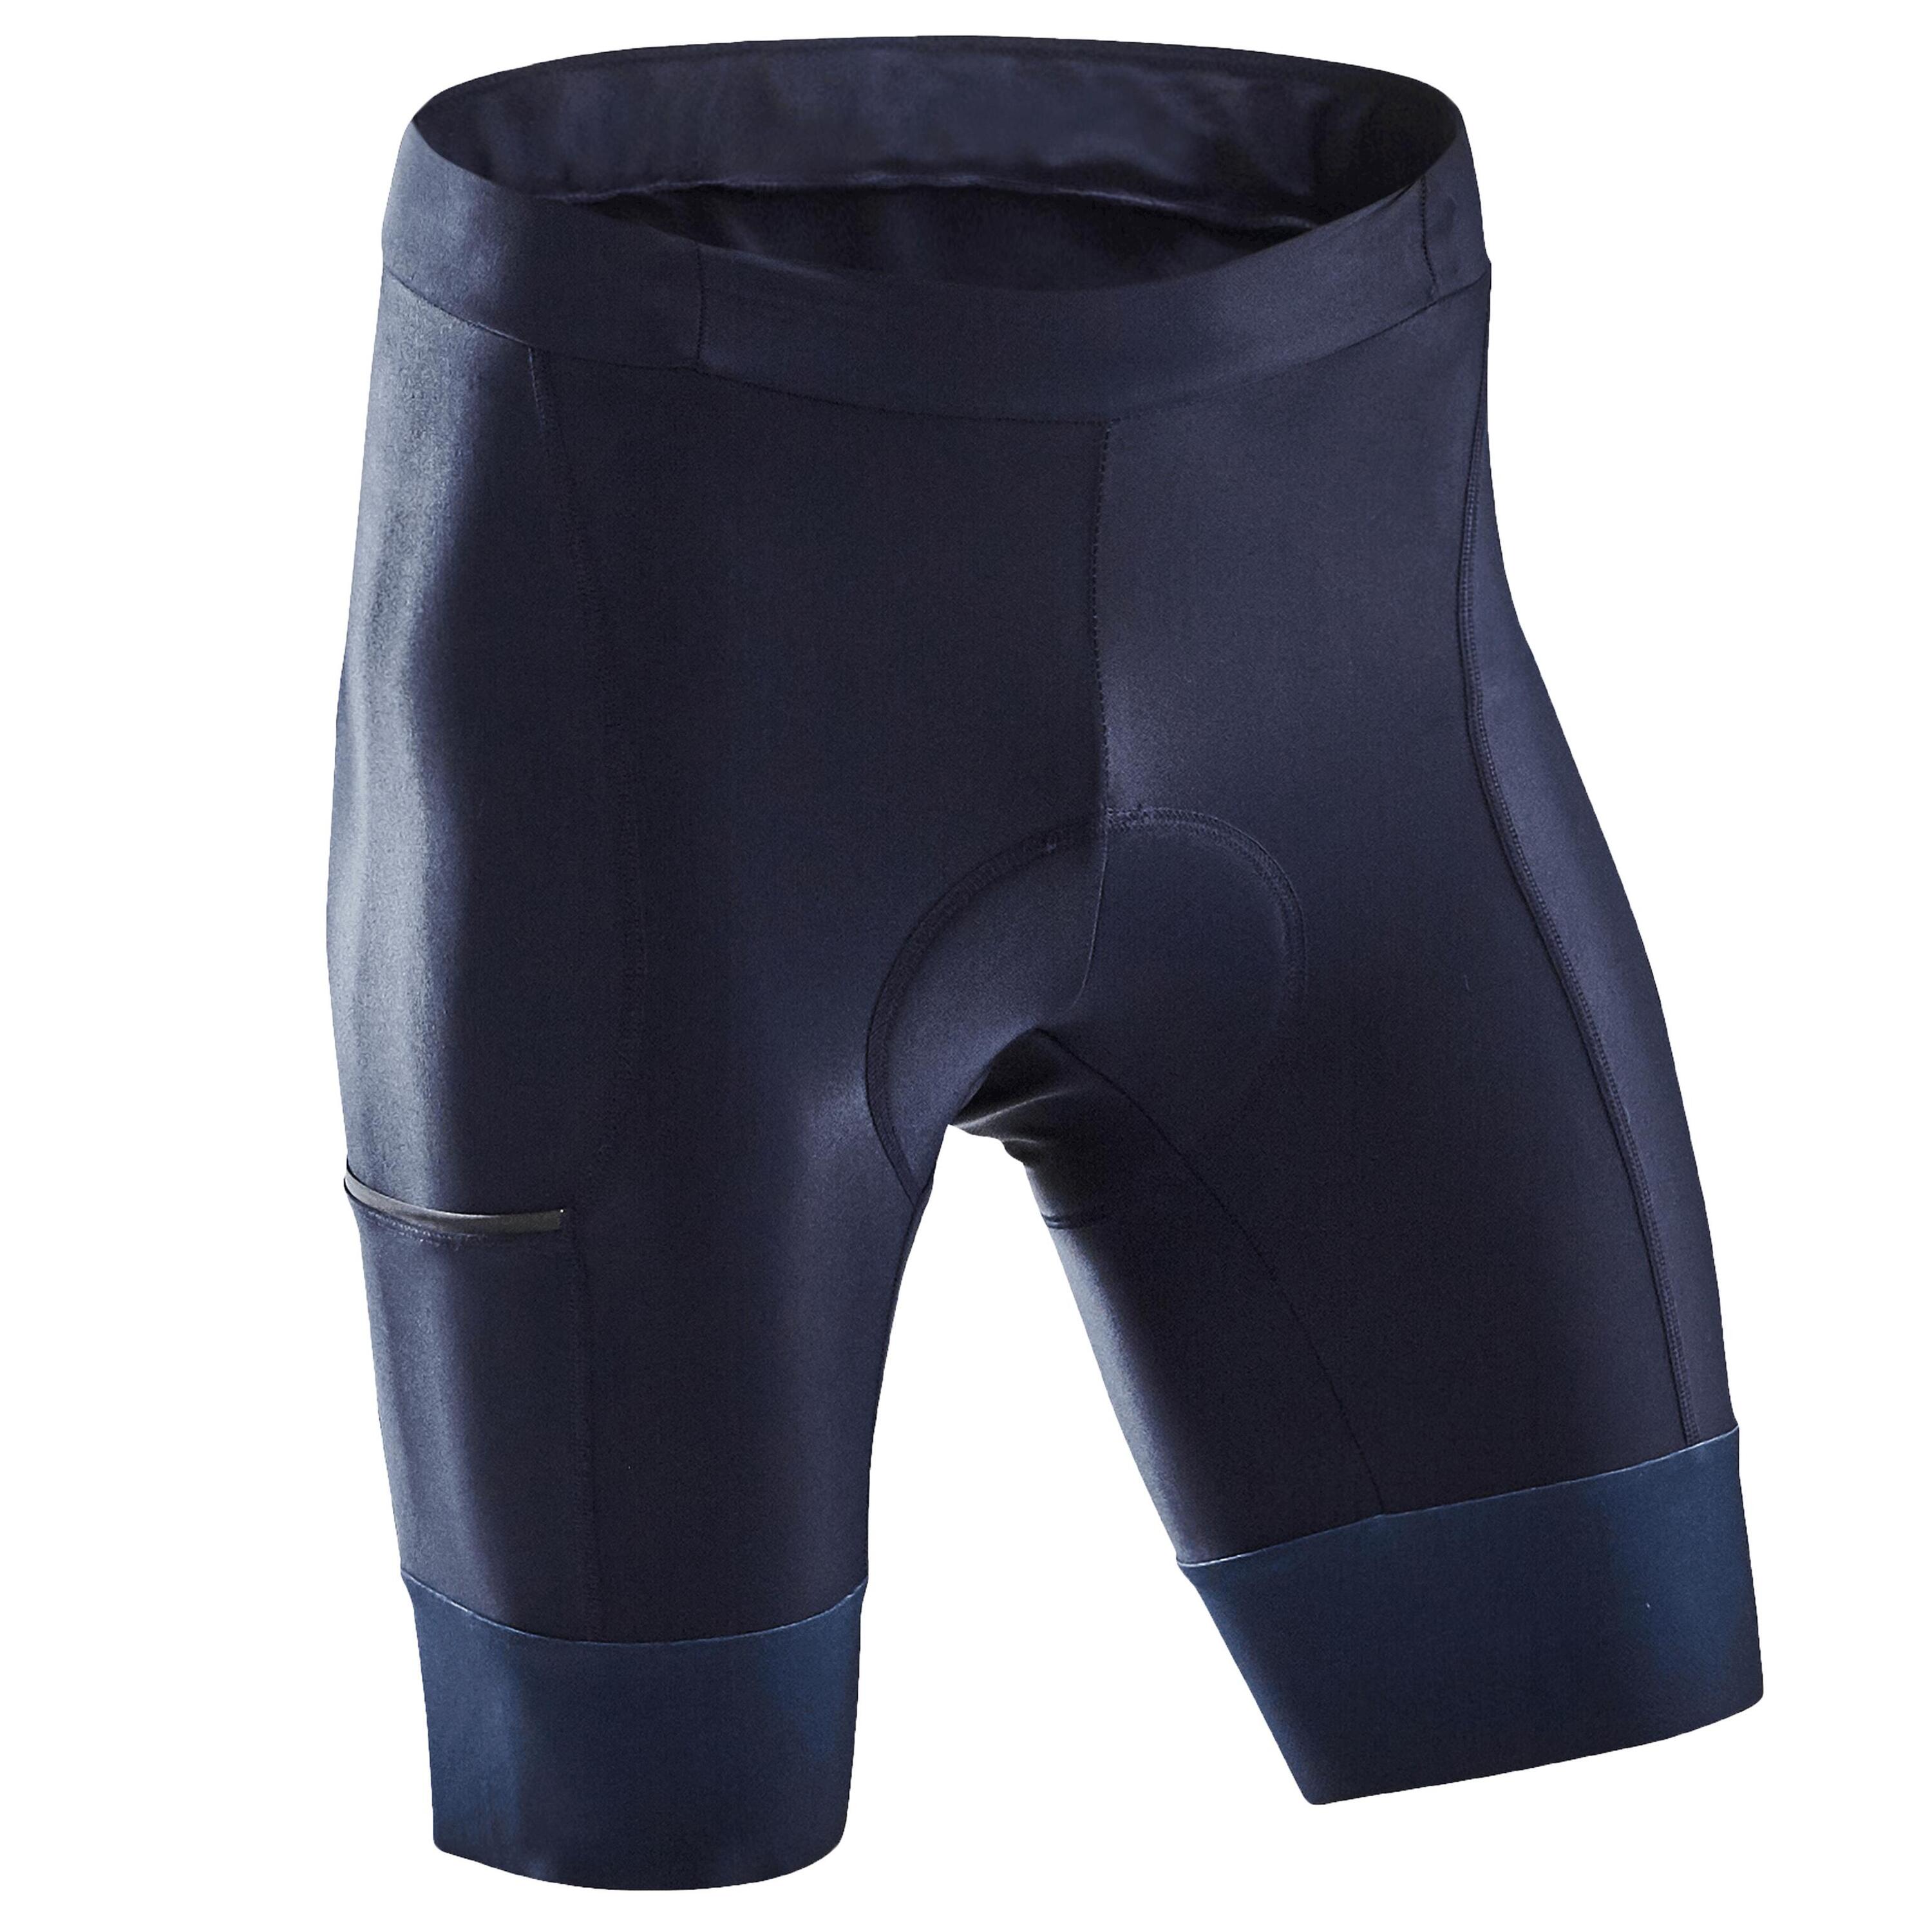 TRIBAN RC500 Pocket Cycling Shorts - Black